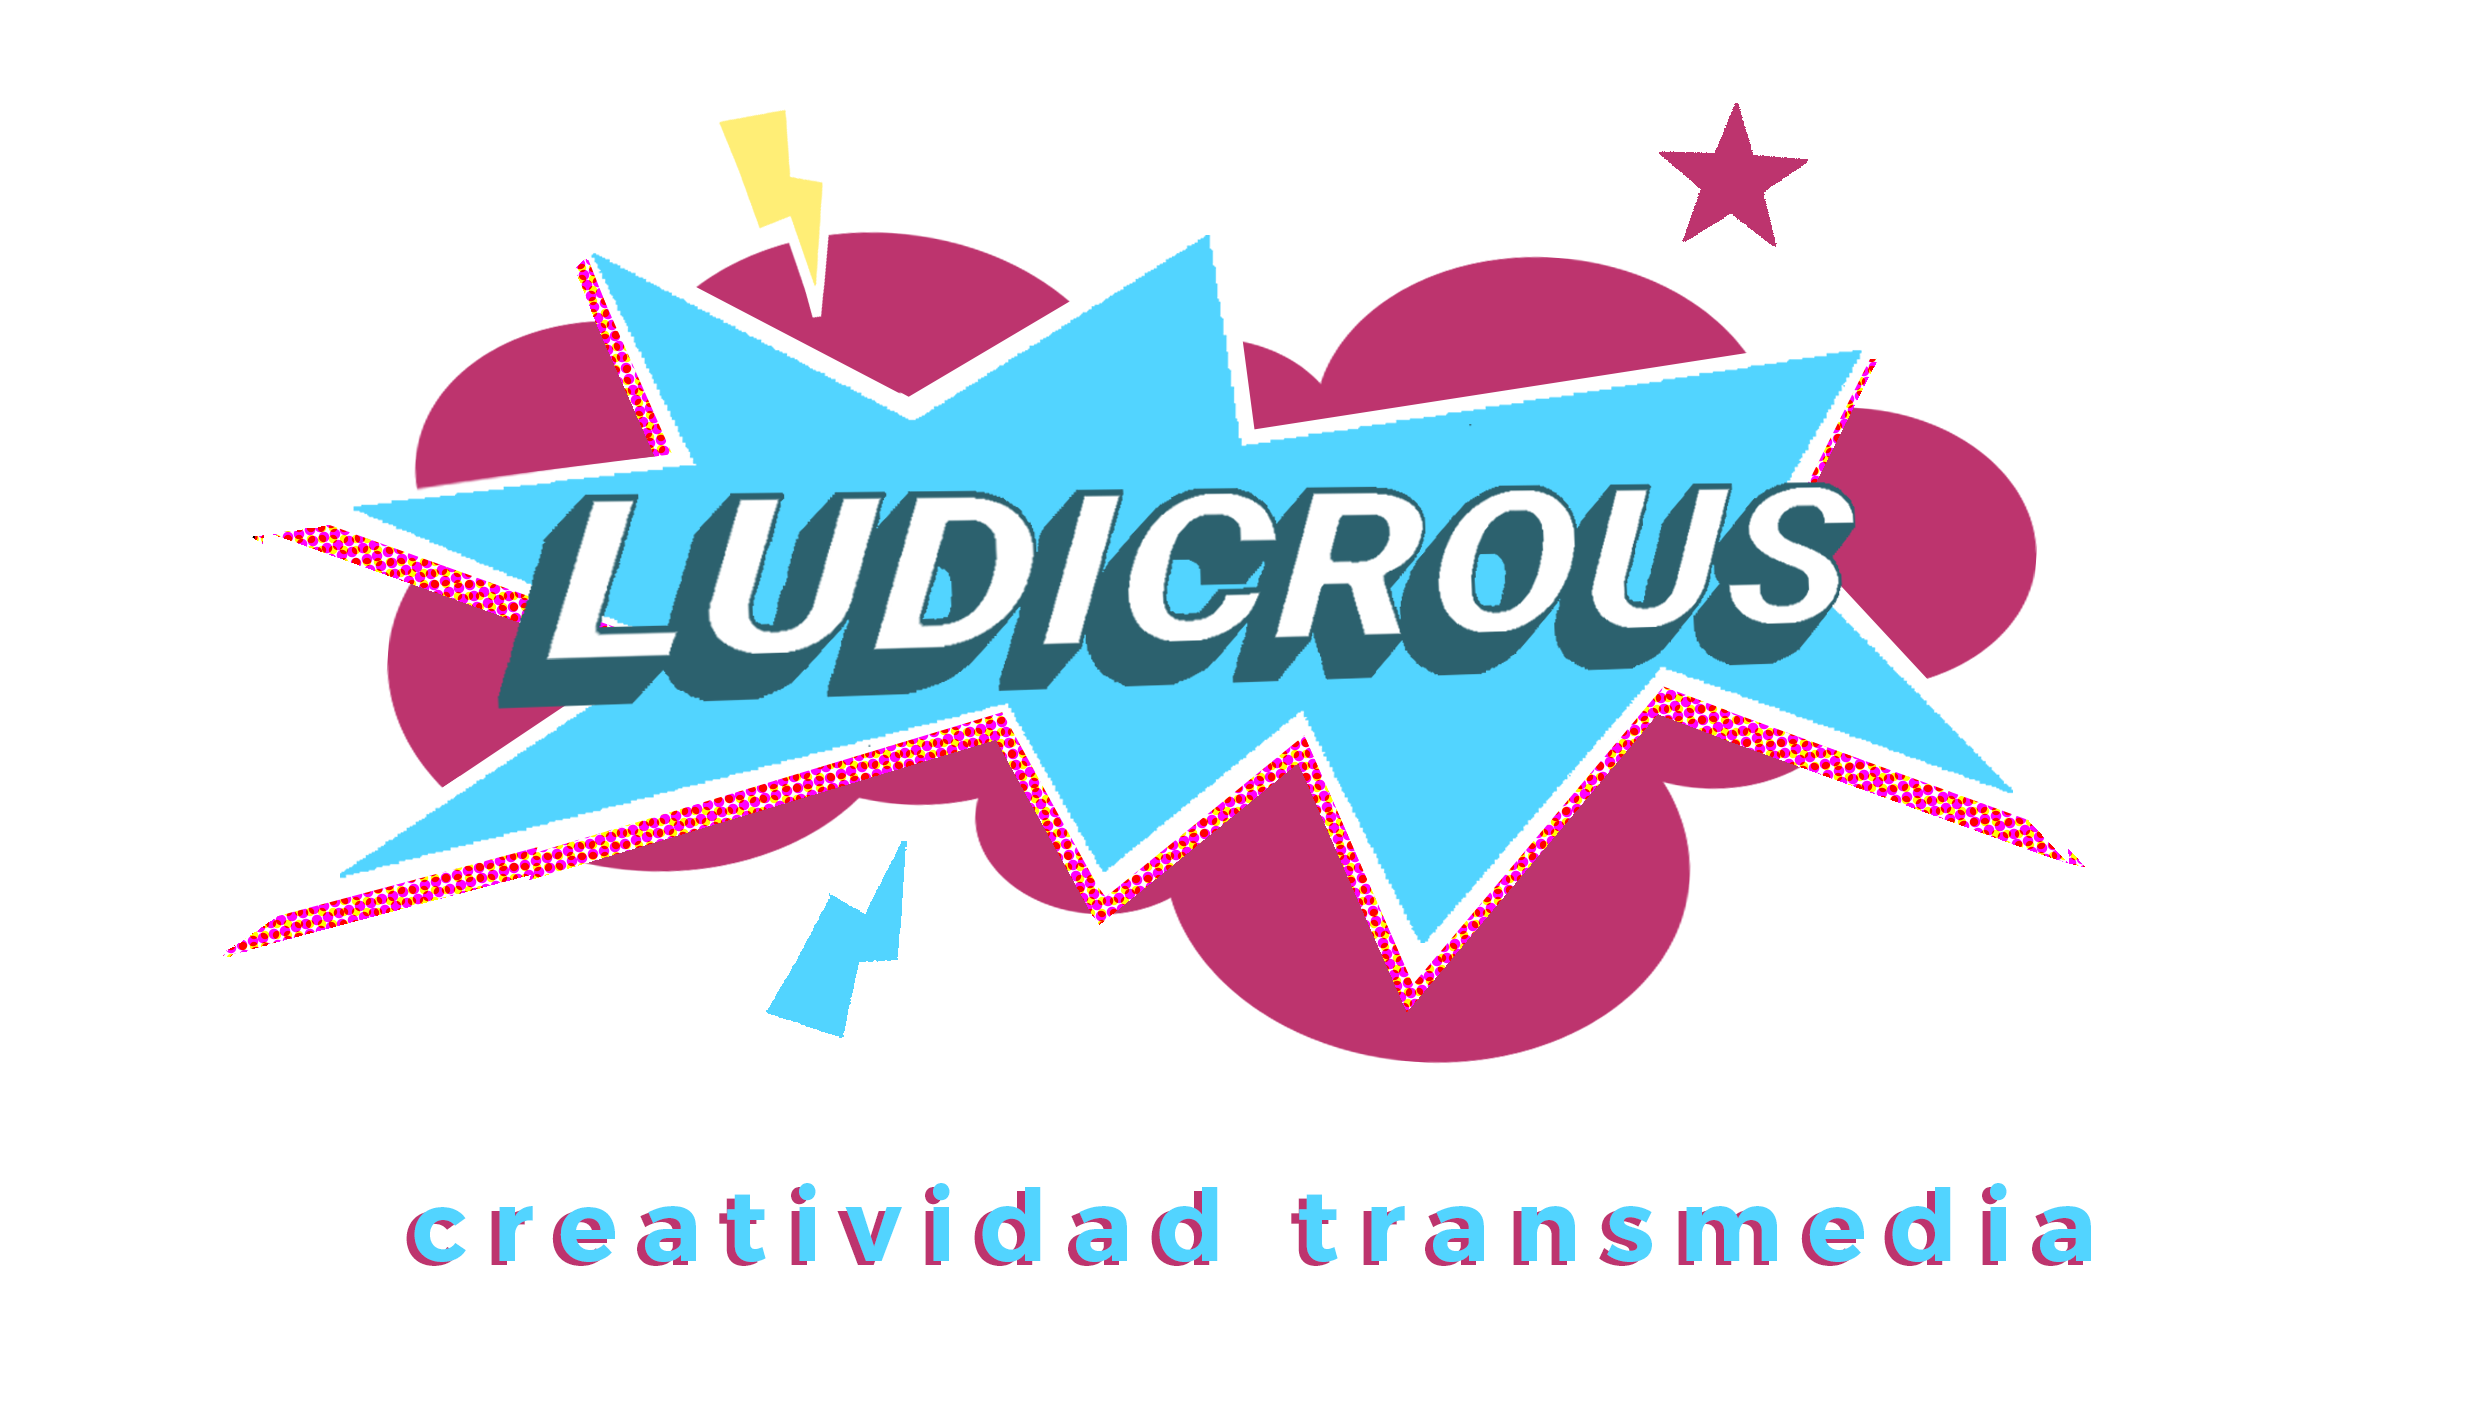 LudicrousBest_CreatividadTransmedia